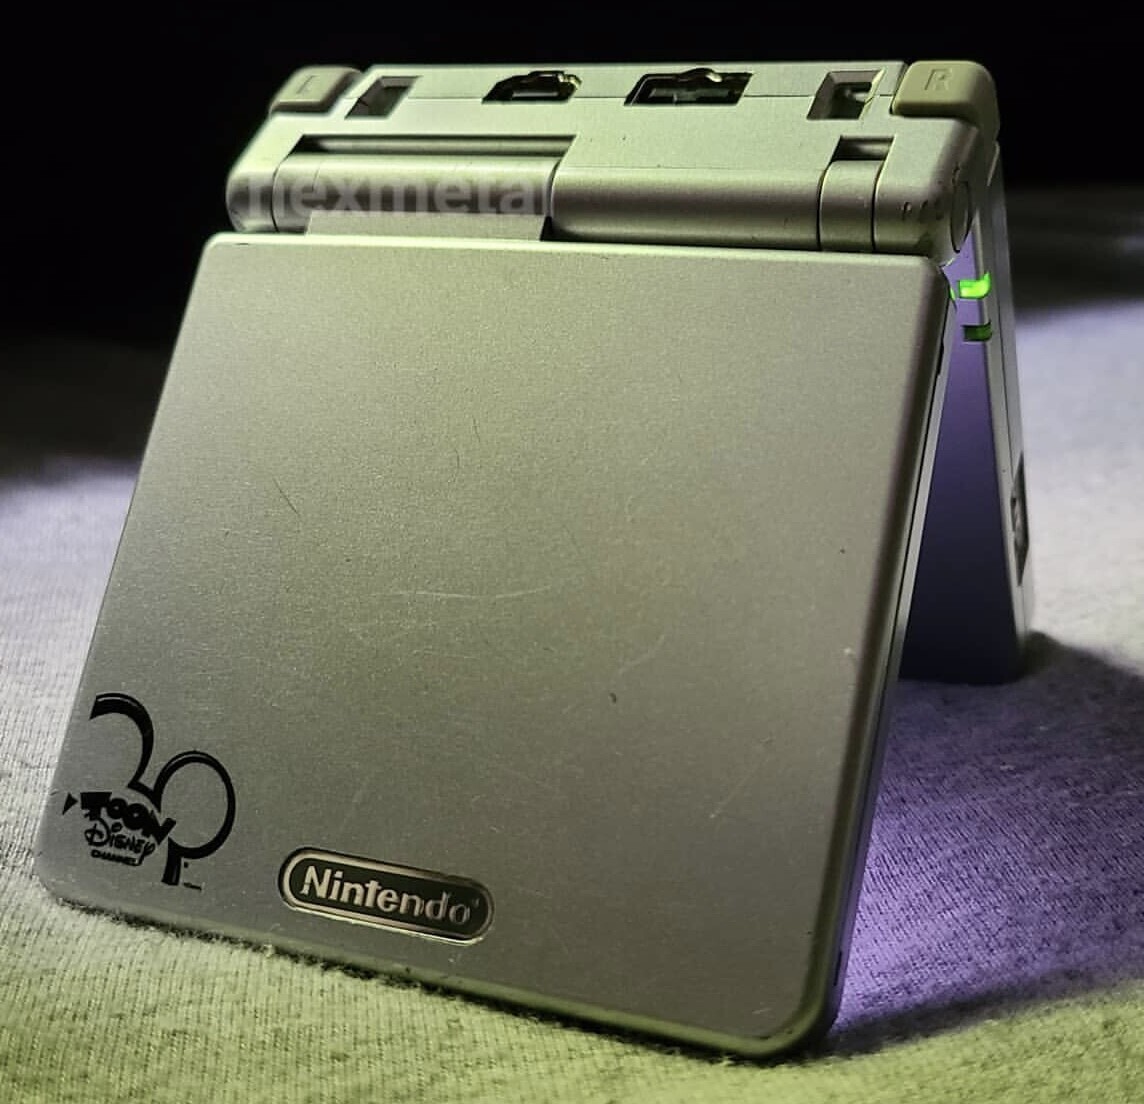  Nintendo Game Boy Advance SP Disney Channel Silver Console